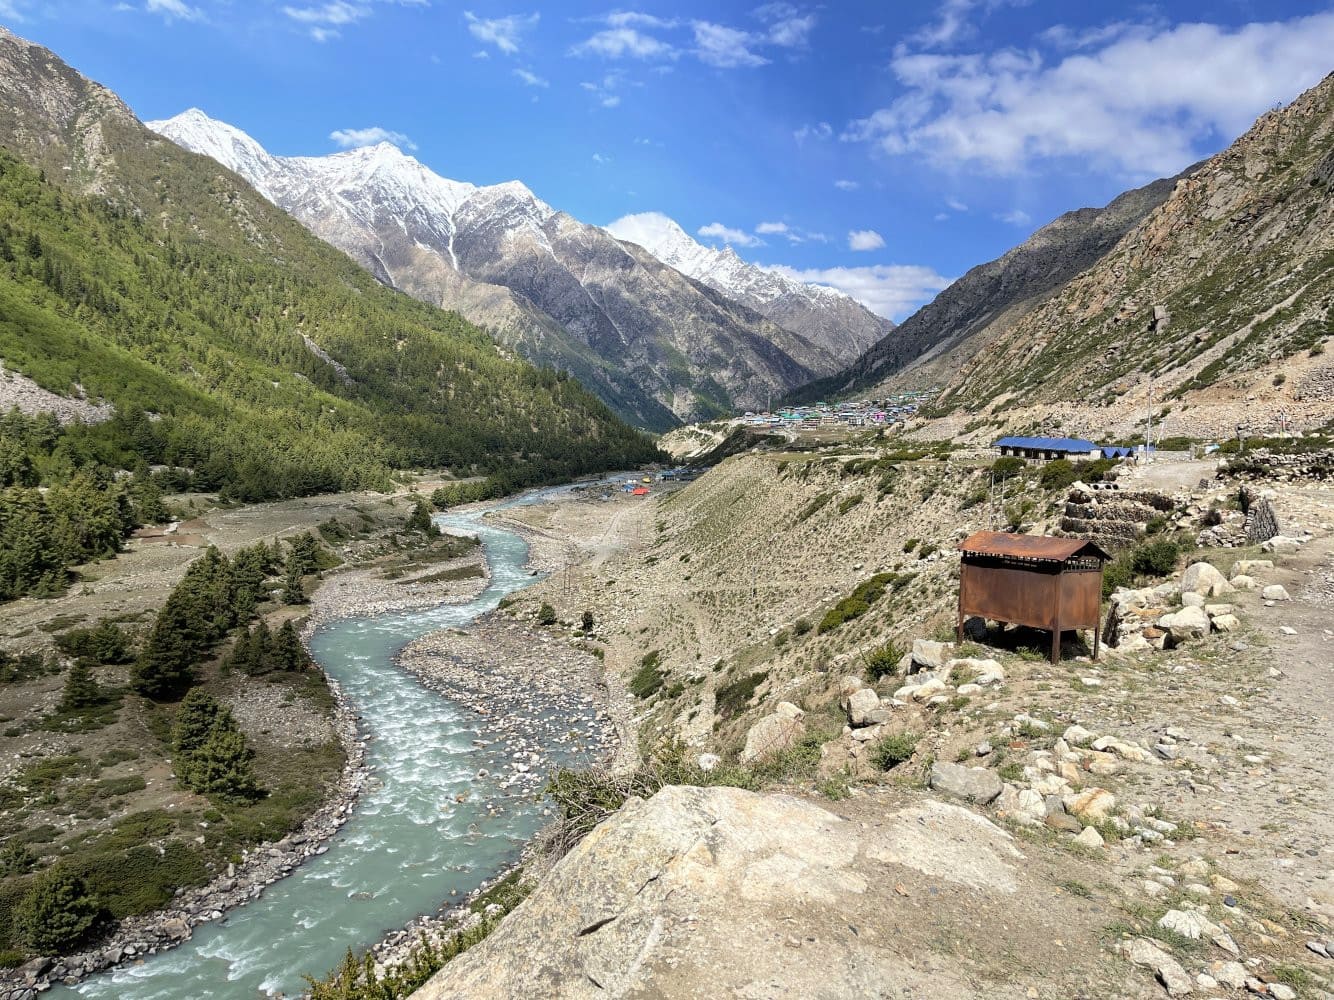 Baspa river flowing below Chitkul Village during late spring